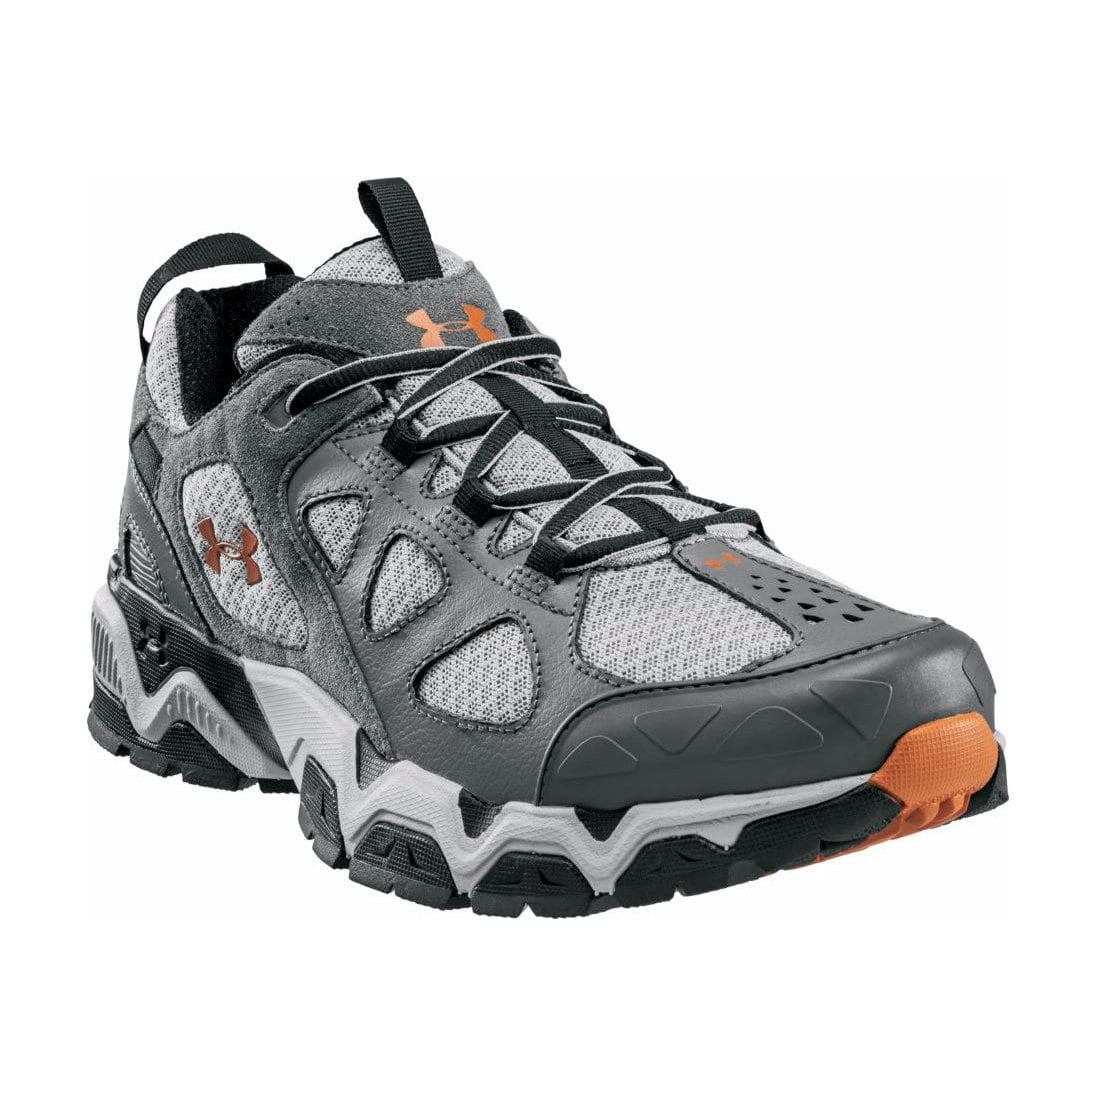 Resentimiento moco Limpiar el piso Under Armour Mirage 3.0 Men's Hiking Shoes 1287351-076 - Rhino Gray/Gray  Wolf - Size 11 - Walmart.com